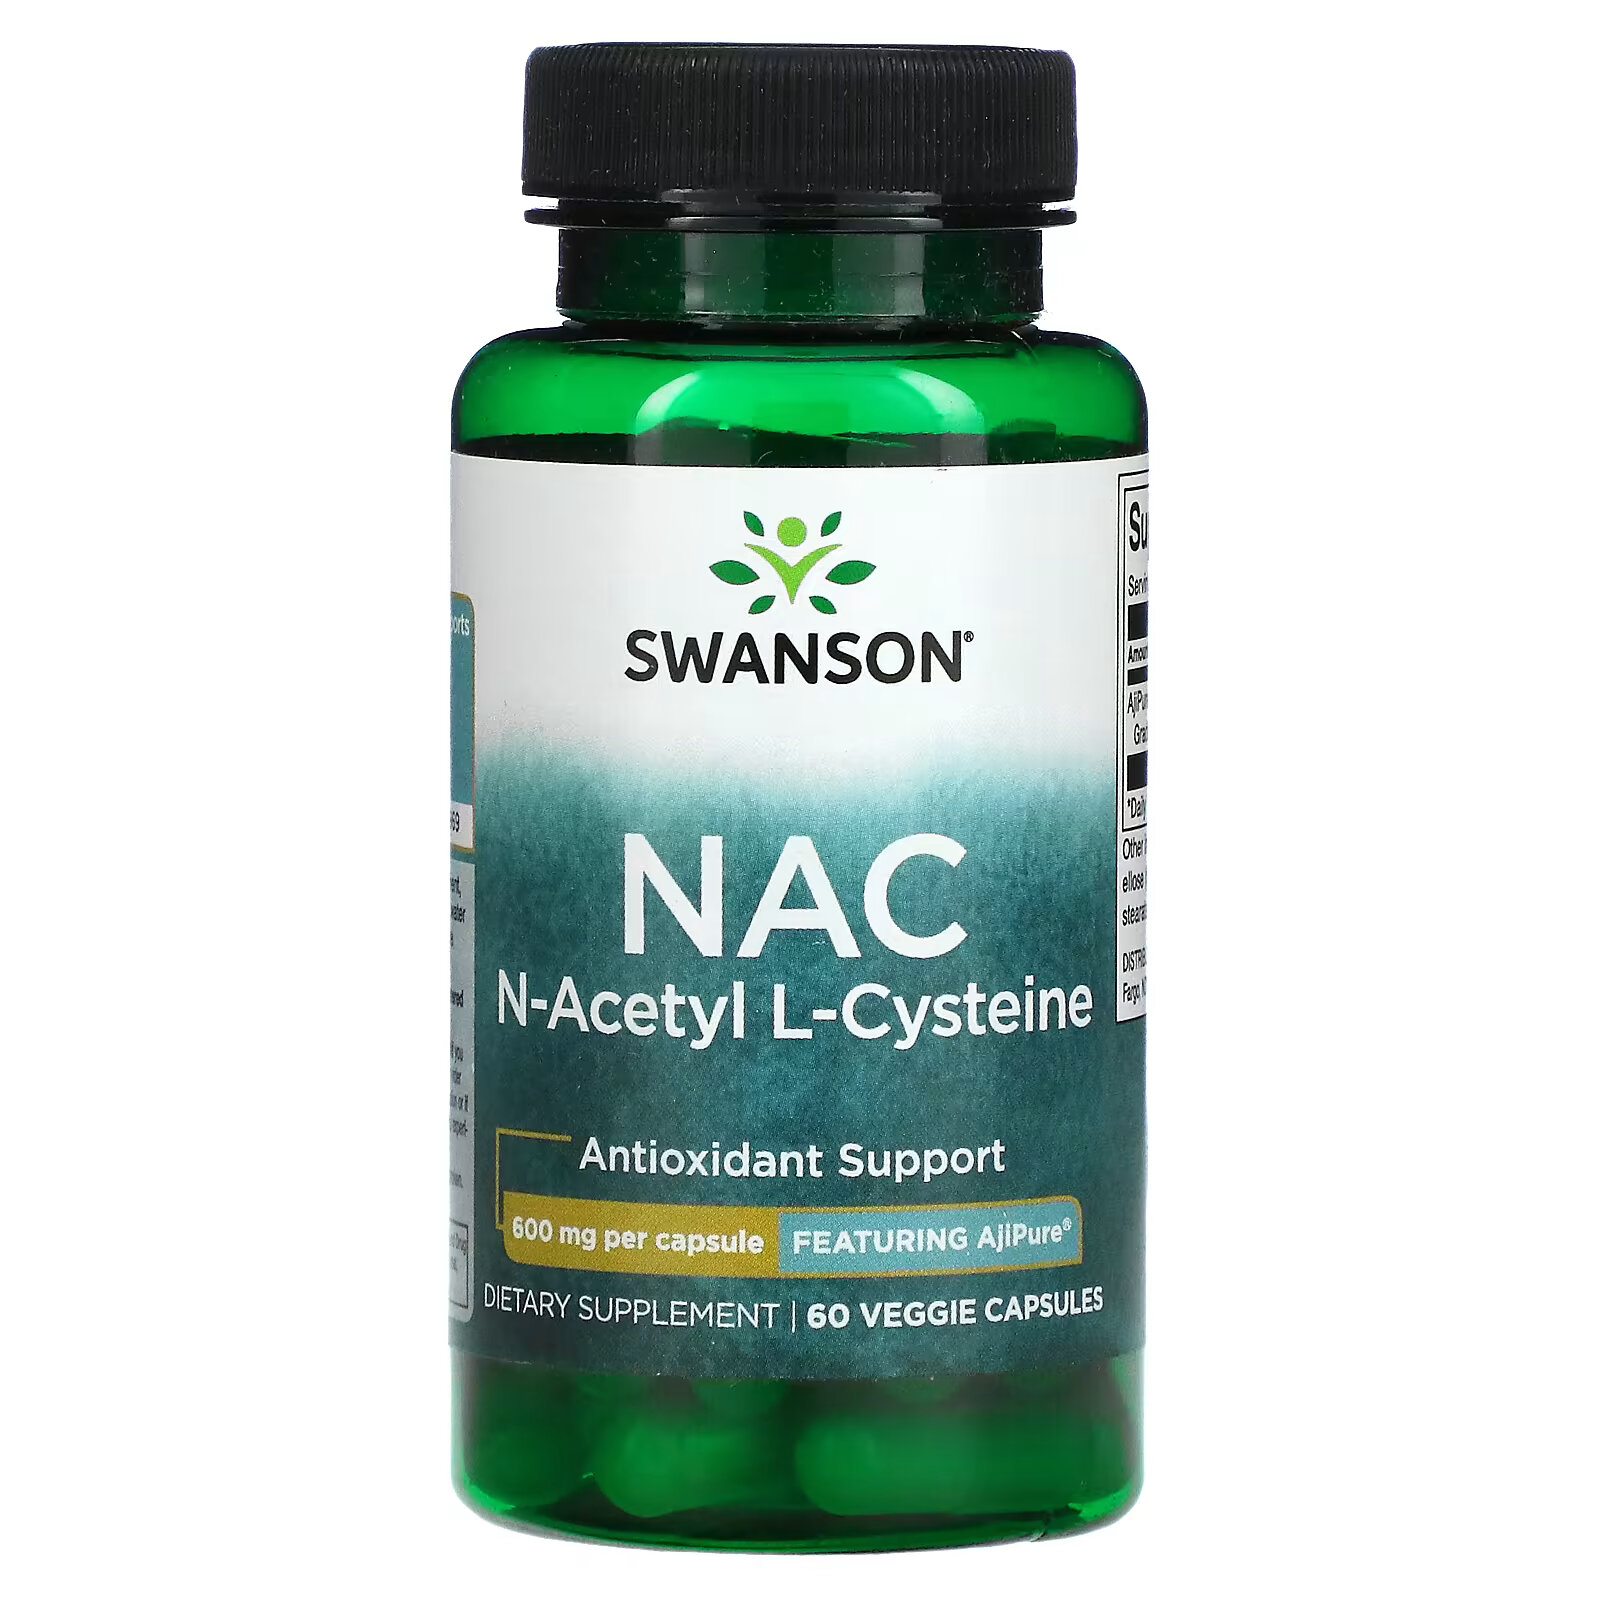 life extension n ацетил l цистеин 600 мг 60 капсул Swanson, NAC, N-ацетил L-цистеин, 600 мг, 60 растительных капсул